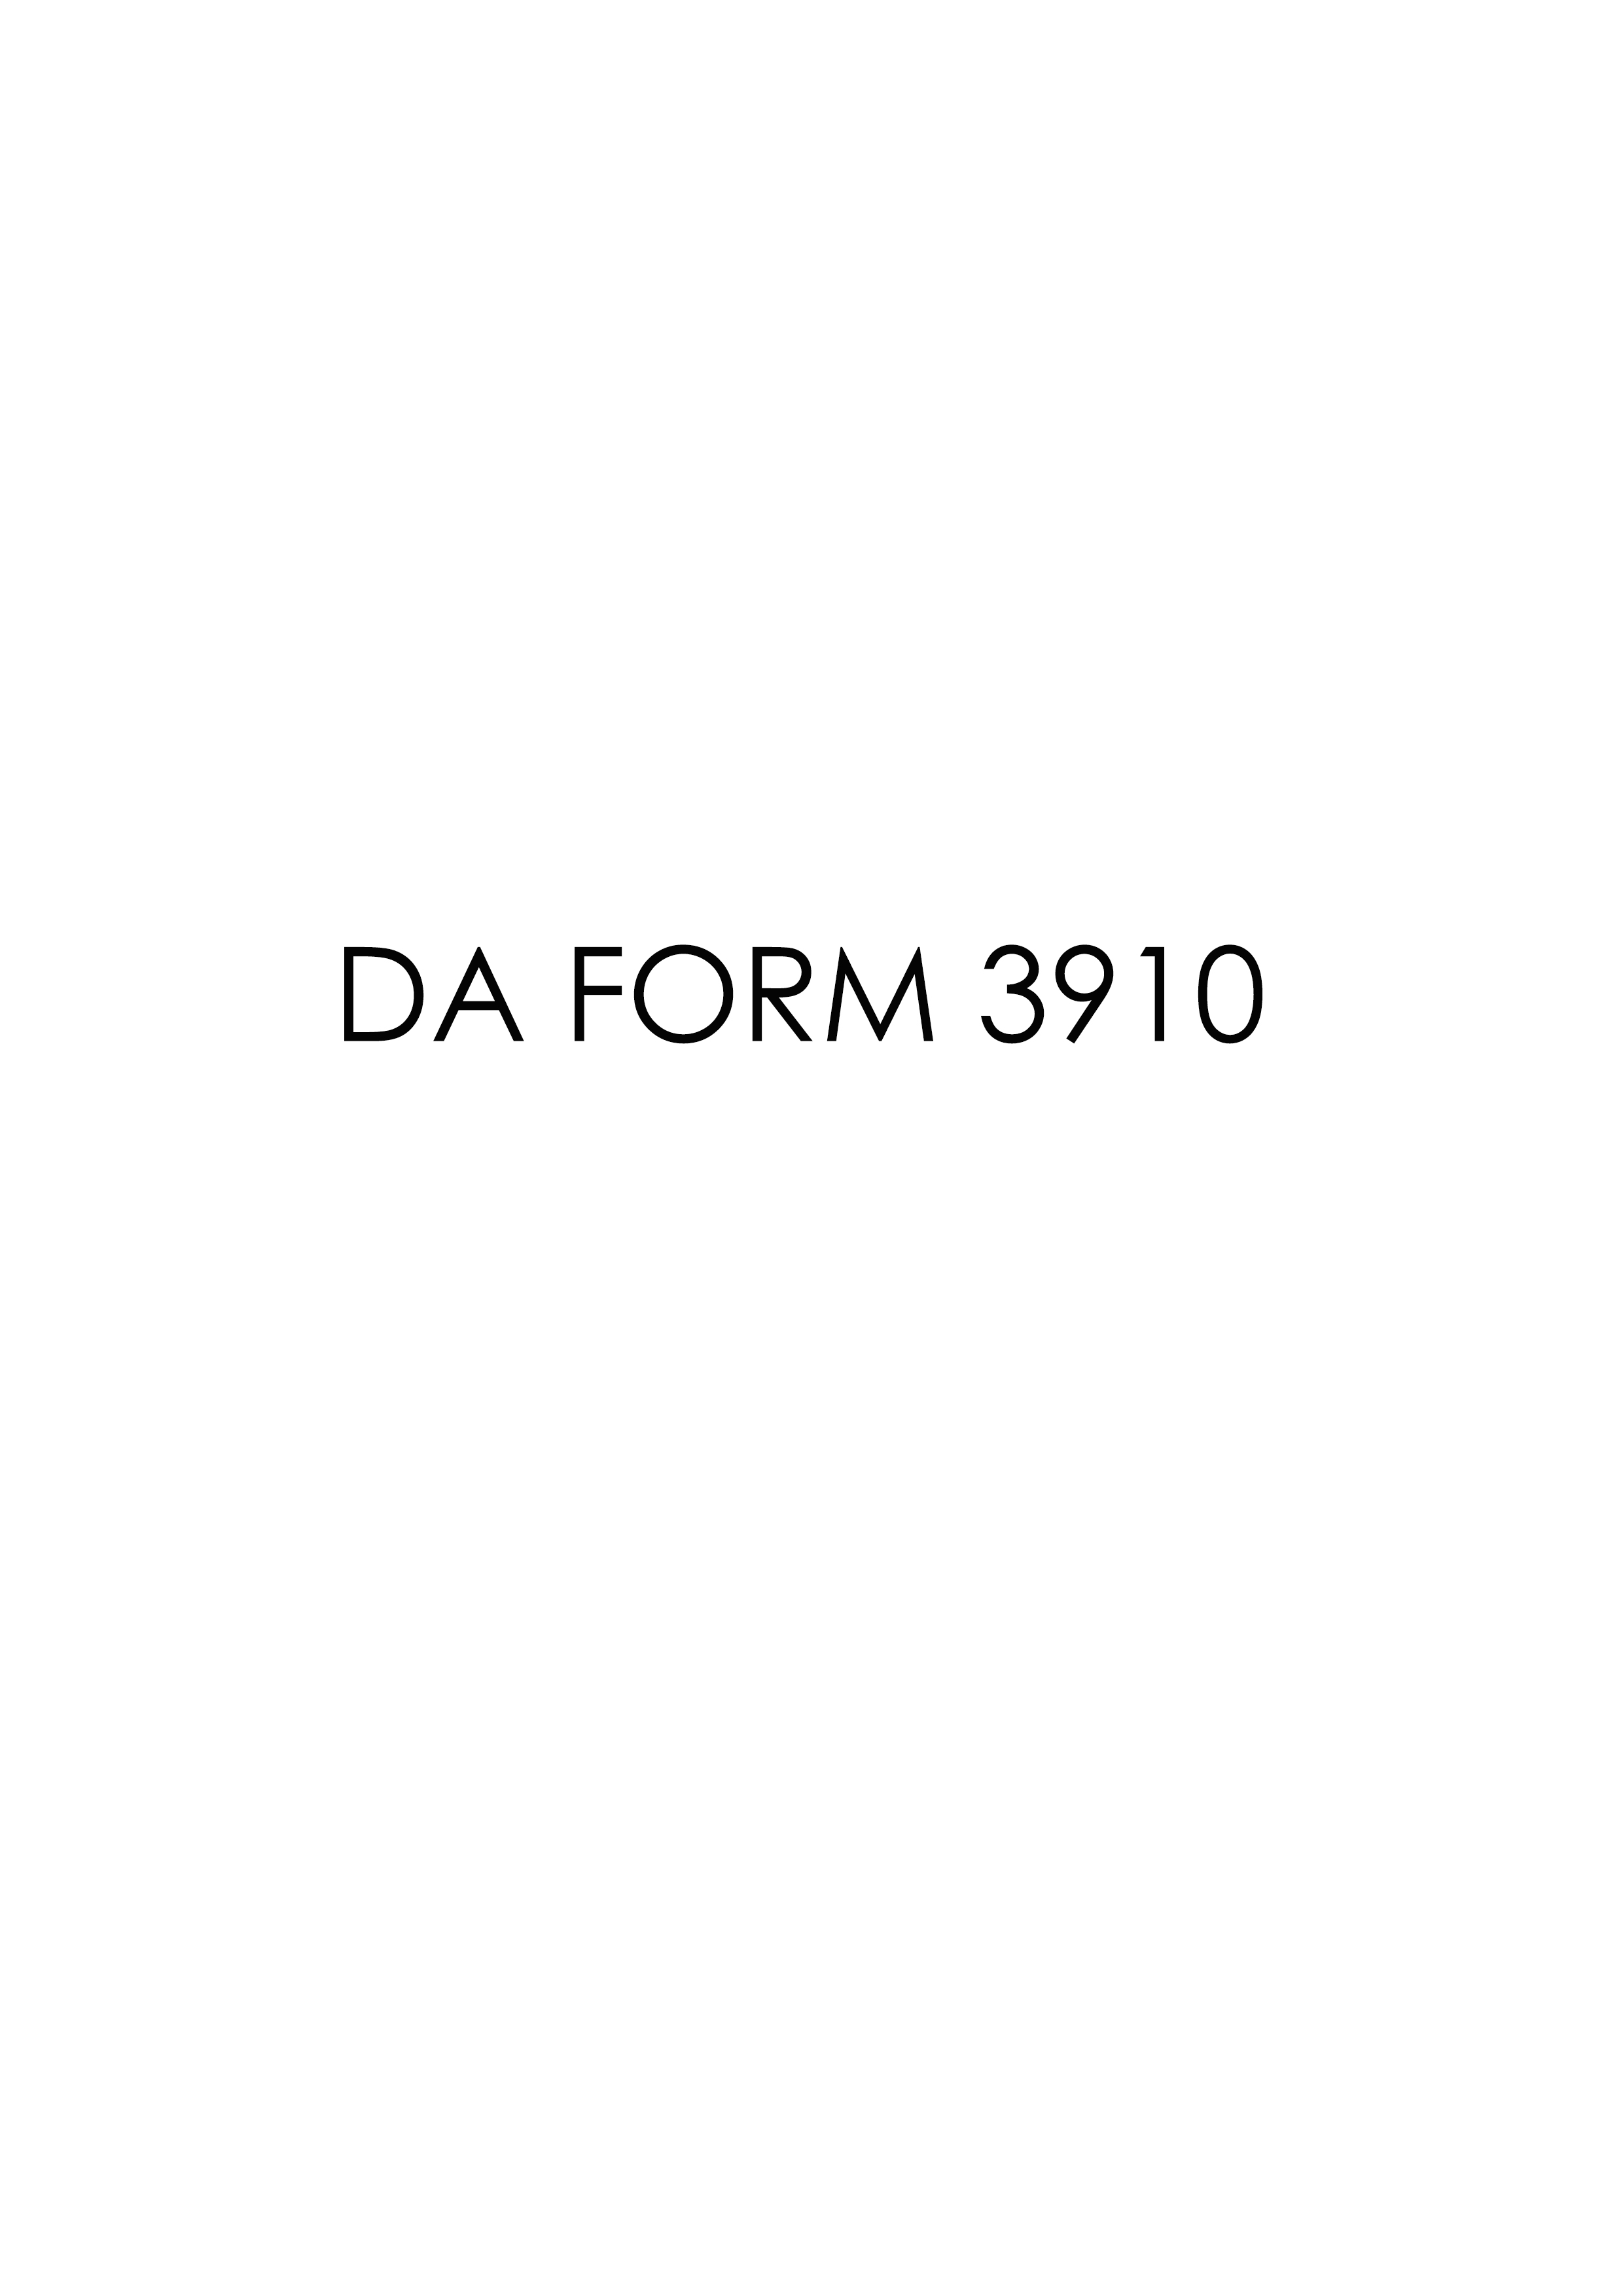 da Form 3910 fillable